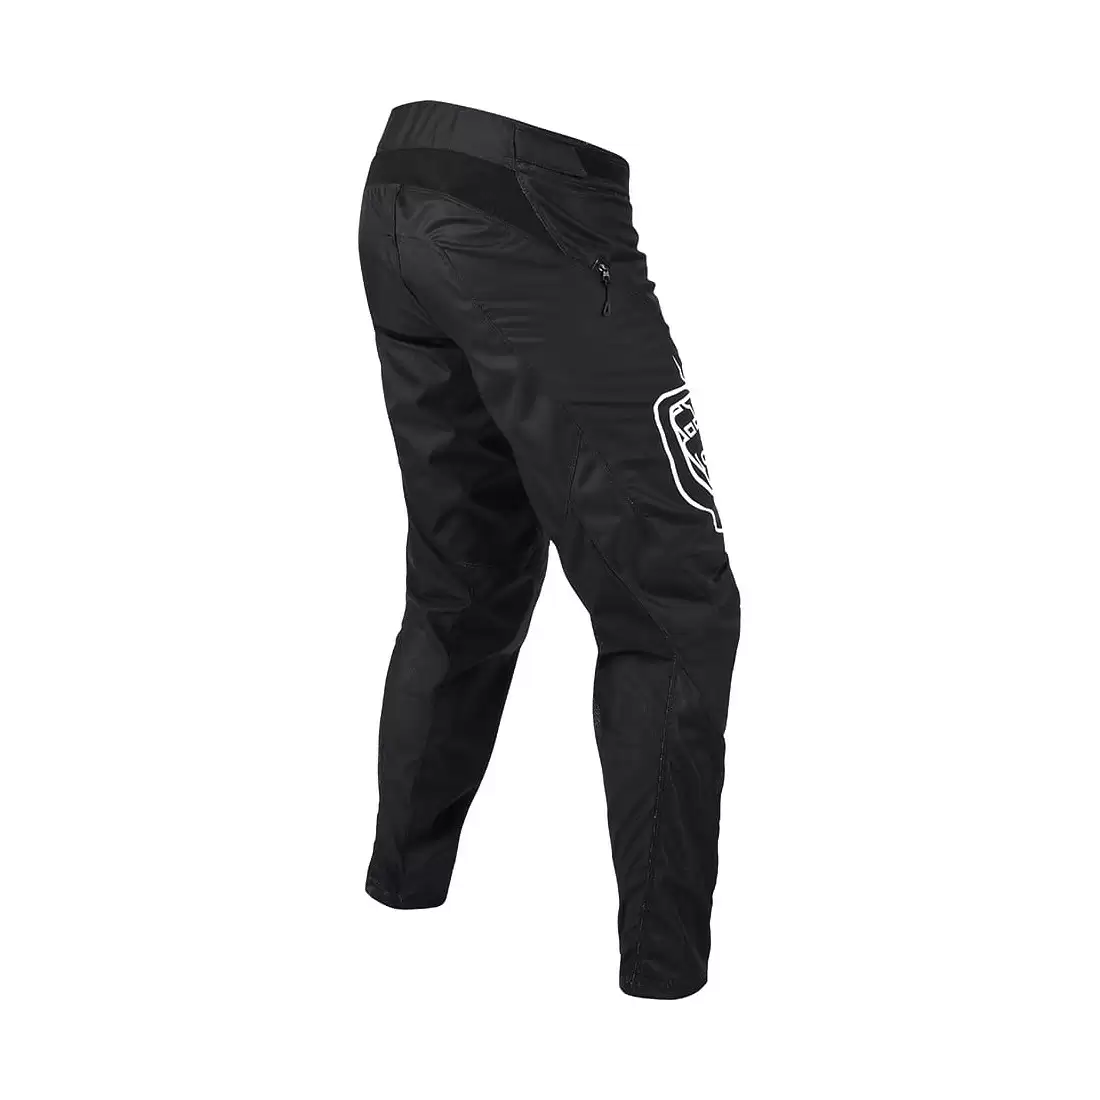 DH/Enduro Sprint MTB Long Pants Black Size XS #1